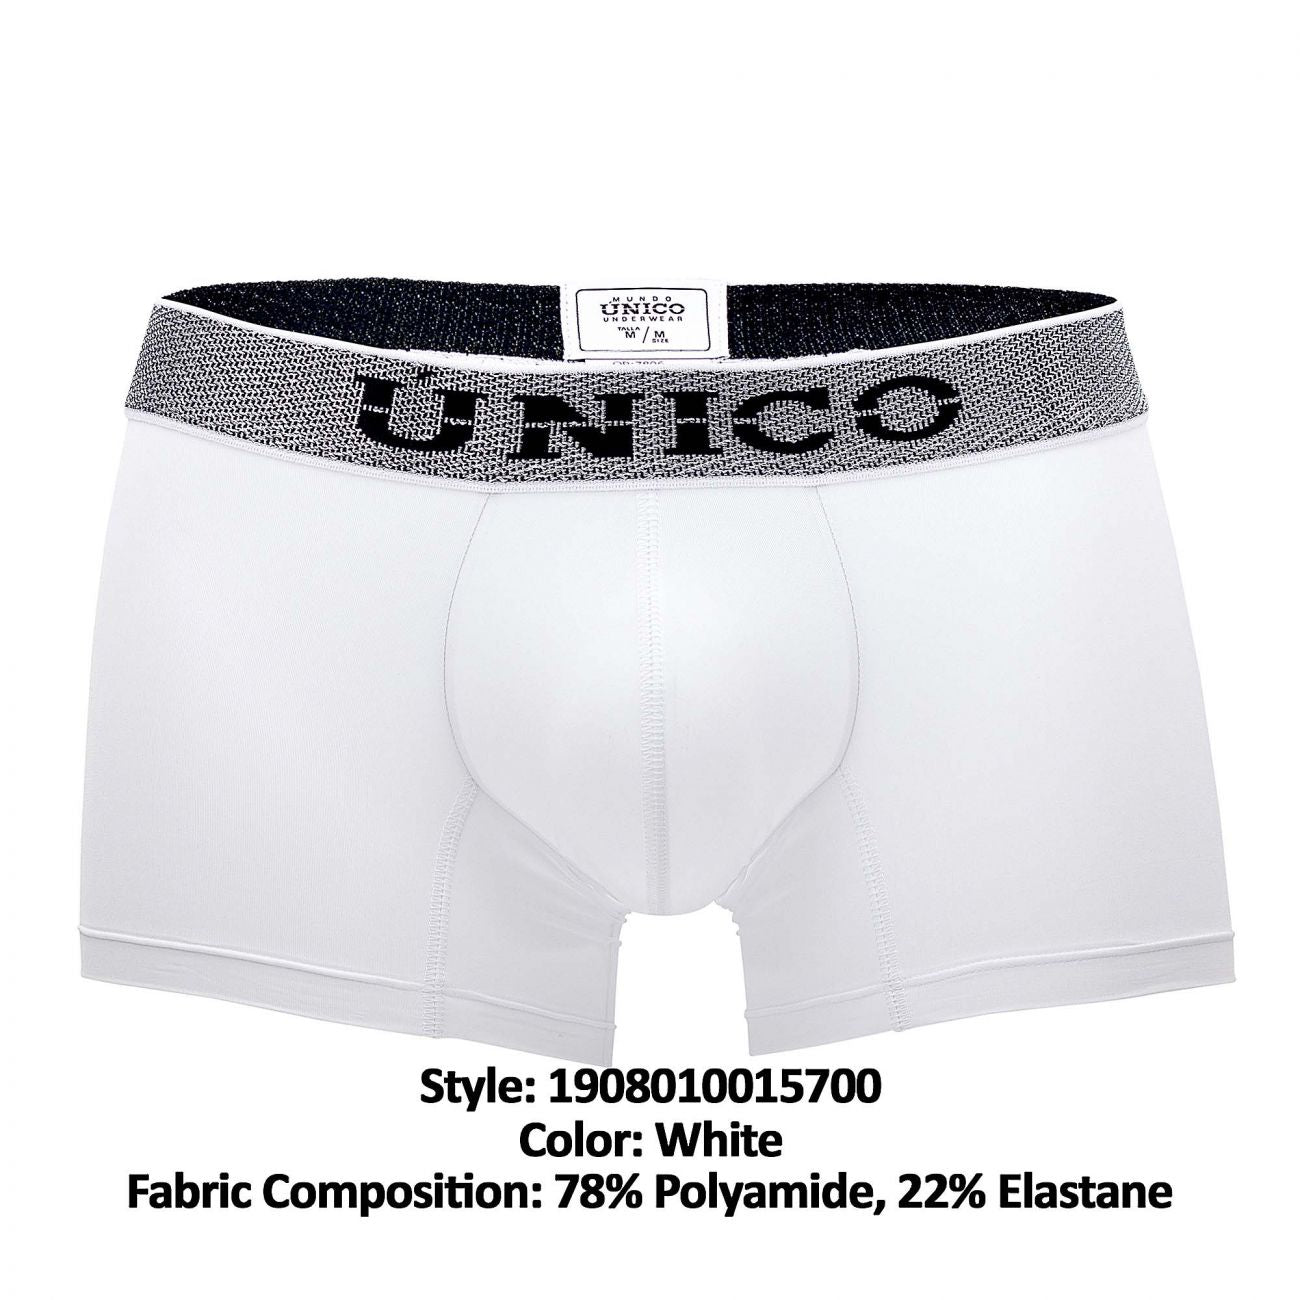 Unico 1908010015700 Trunks Glass White